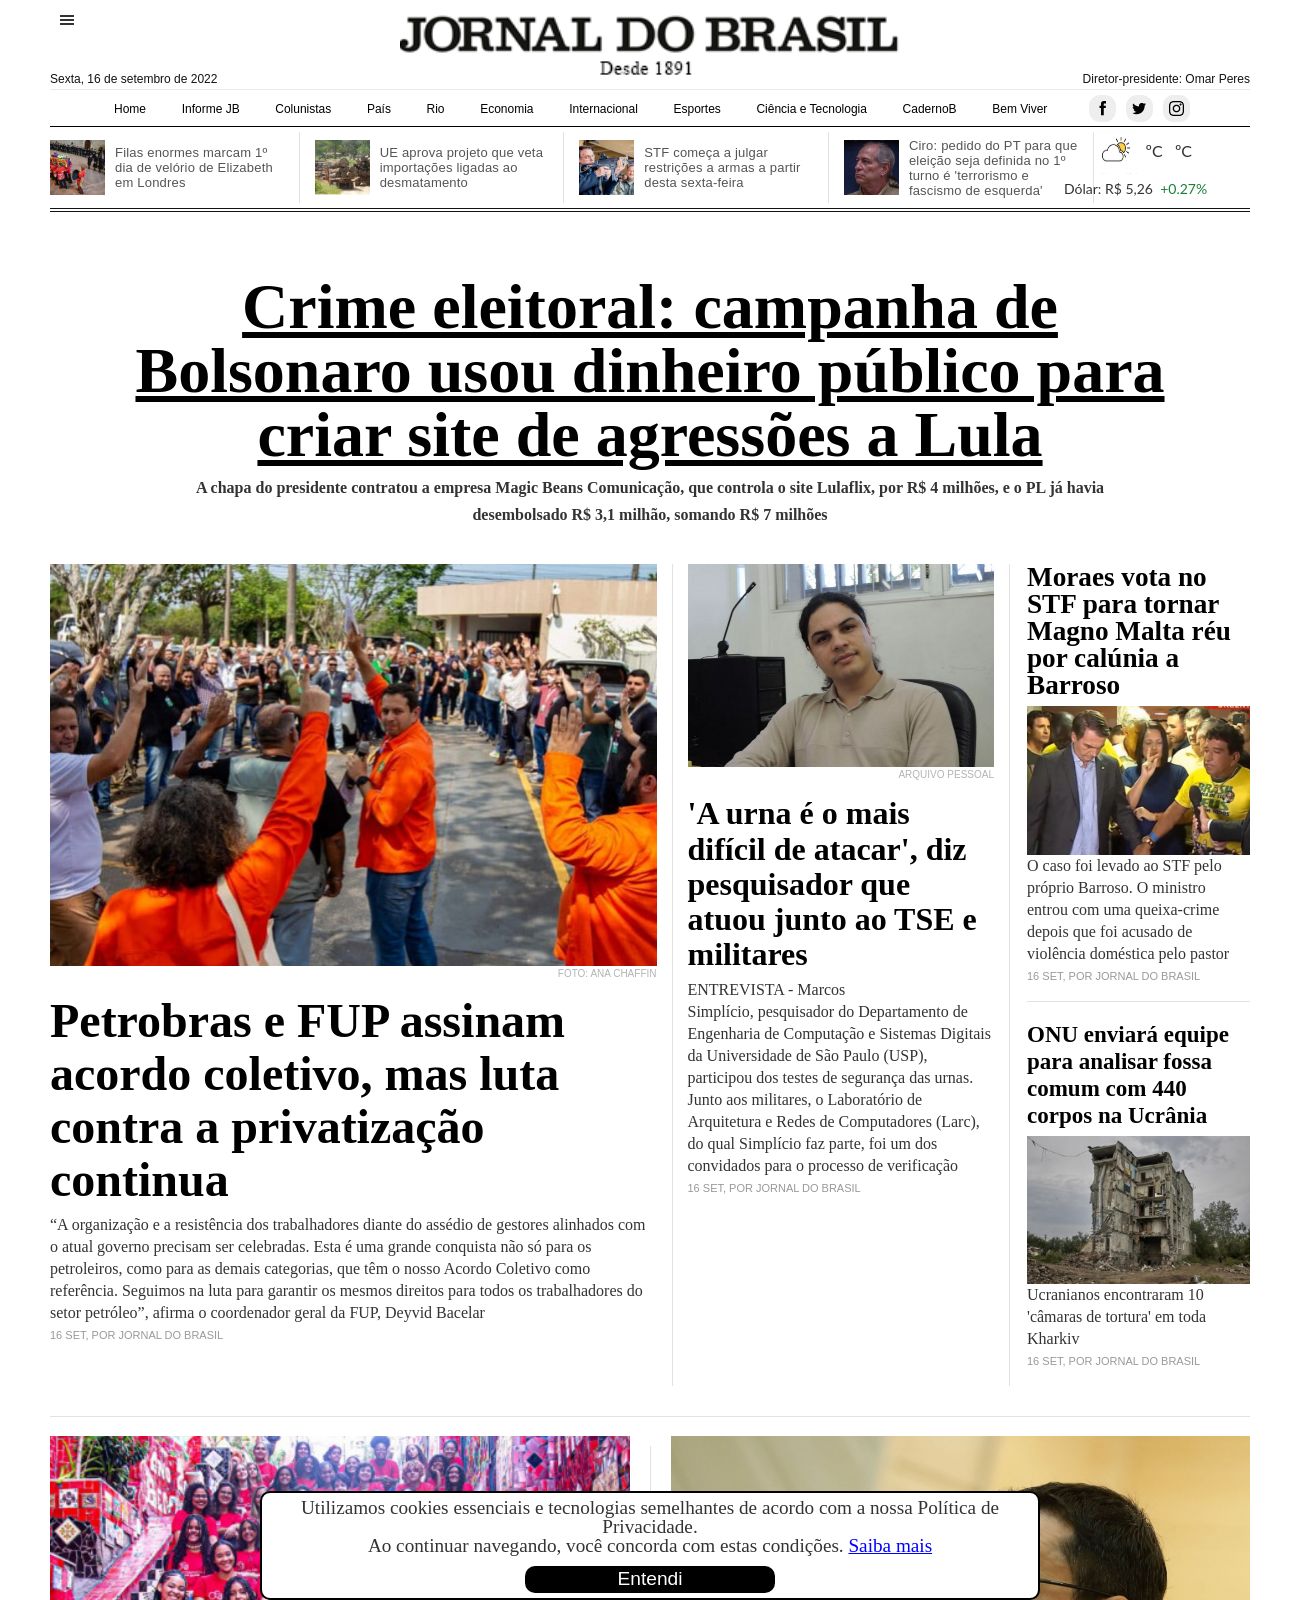 Jornal do Brasil at 2022-09-16 20:52:16-03:00 local time